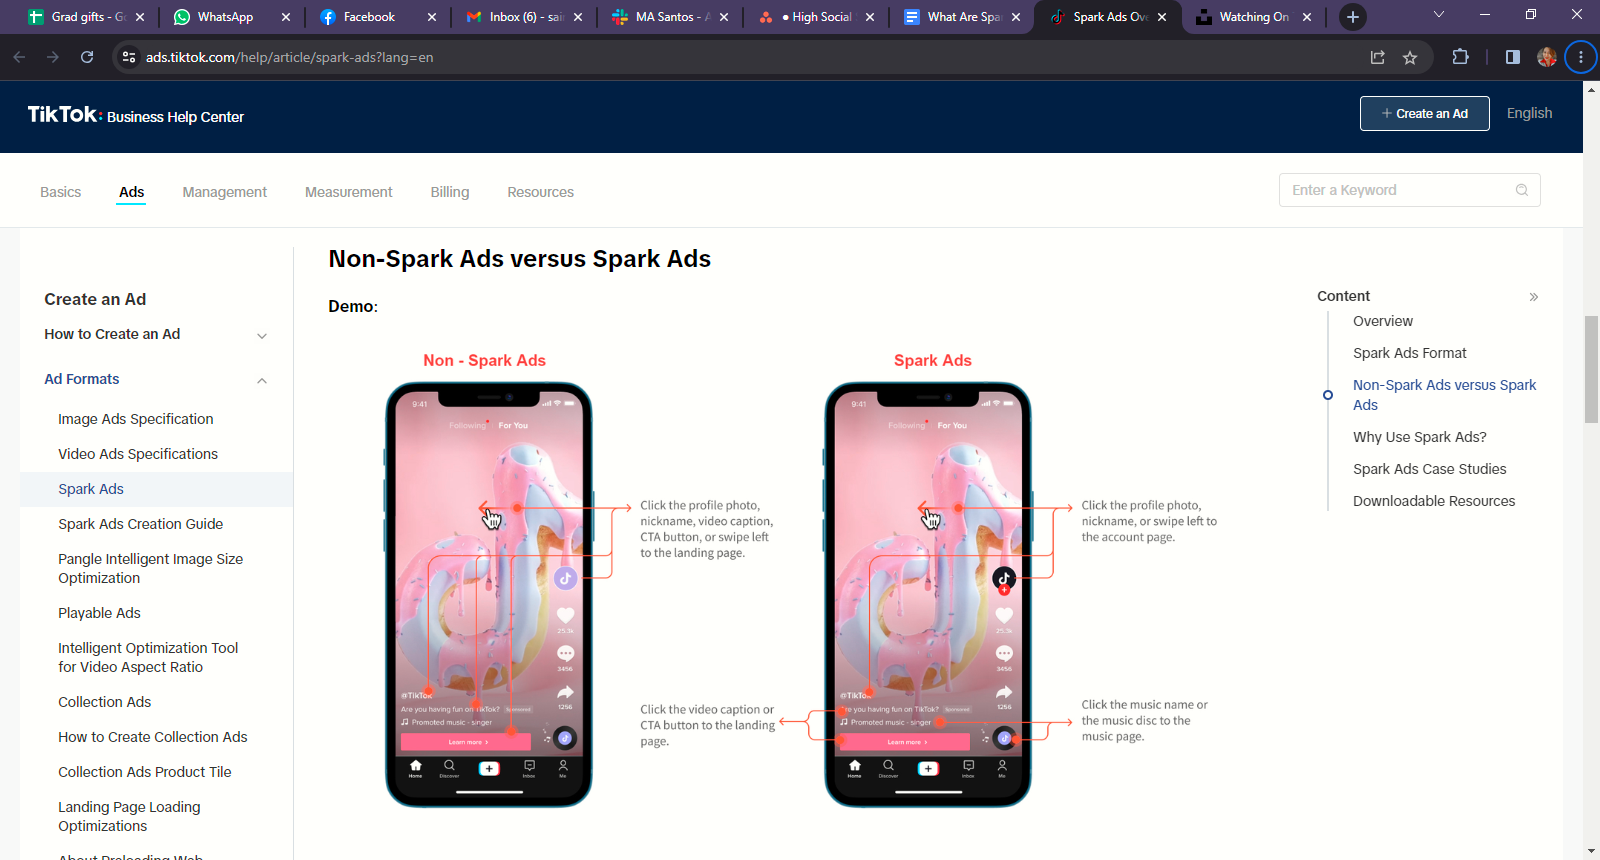 TikTok 商业中心页面，说明星火广告和非星火广告之间的区别。 